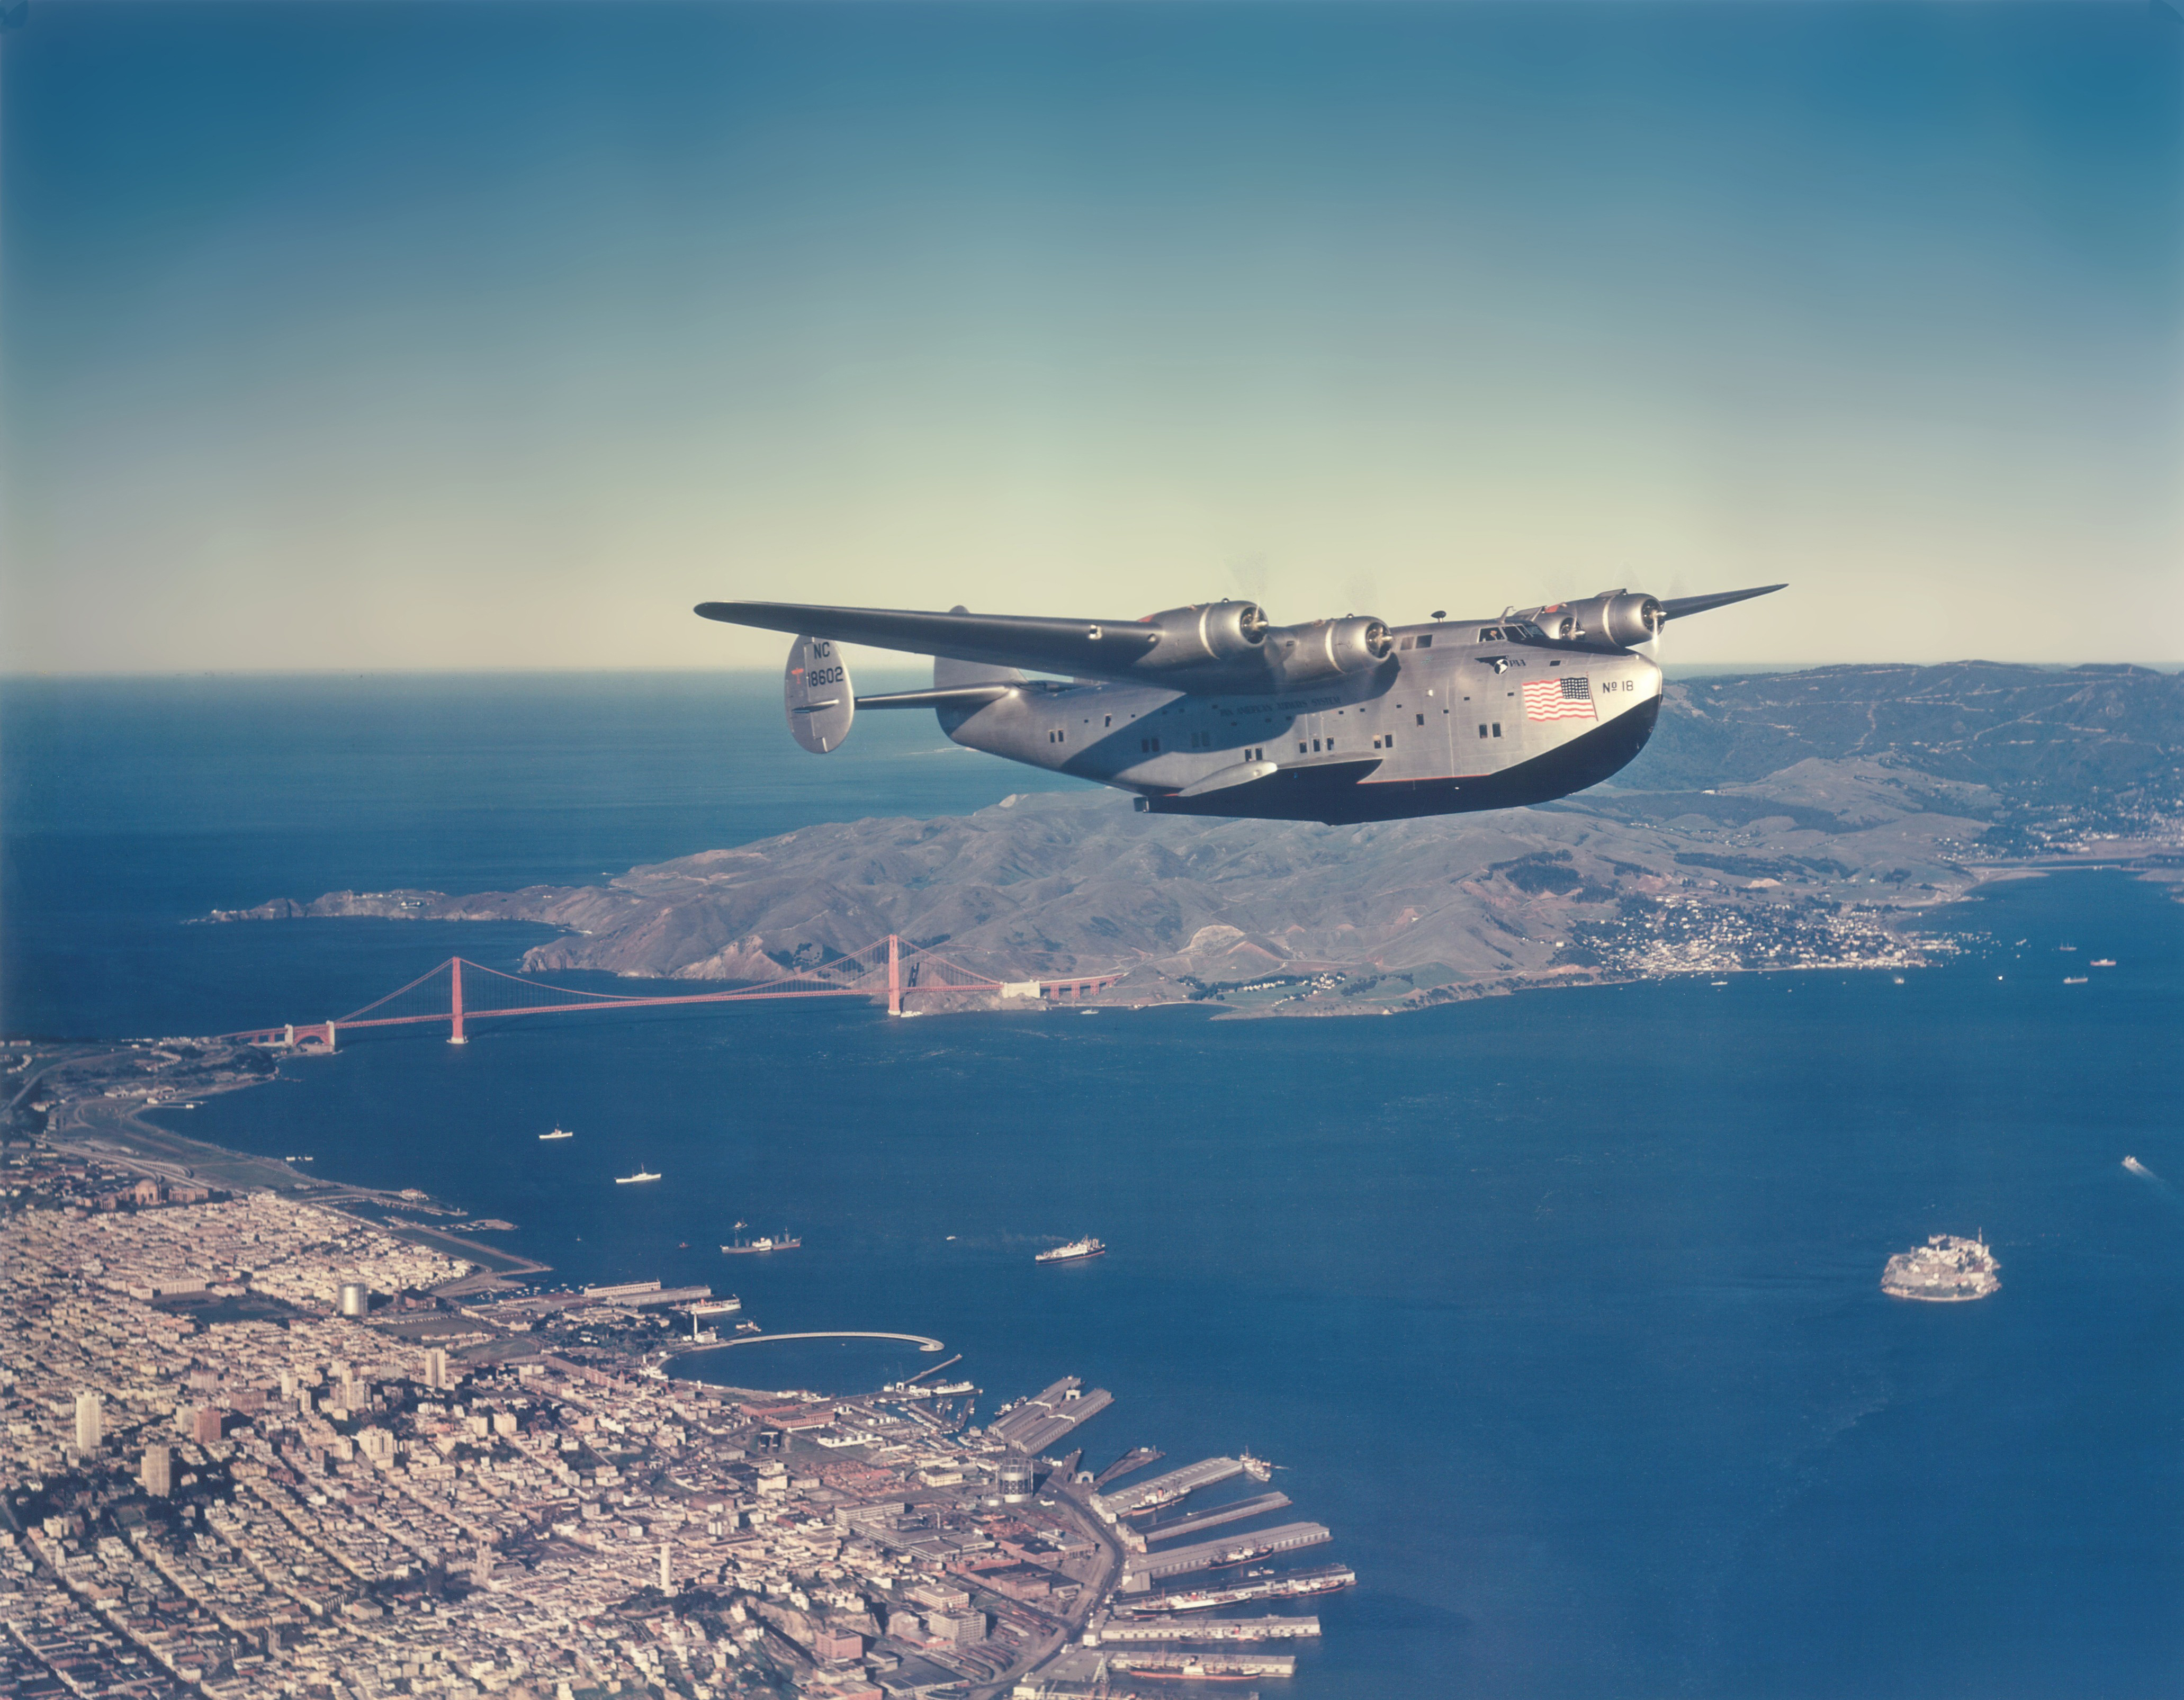 4k Wallpaper Aviation Golden Gate San Francisco Pan American